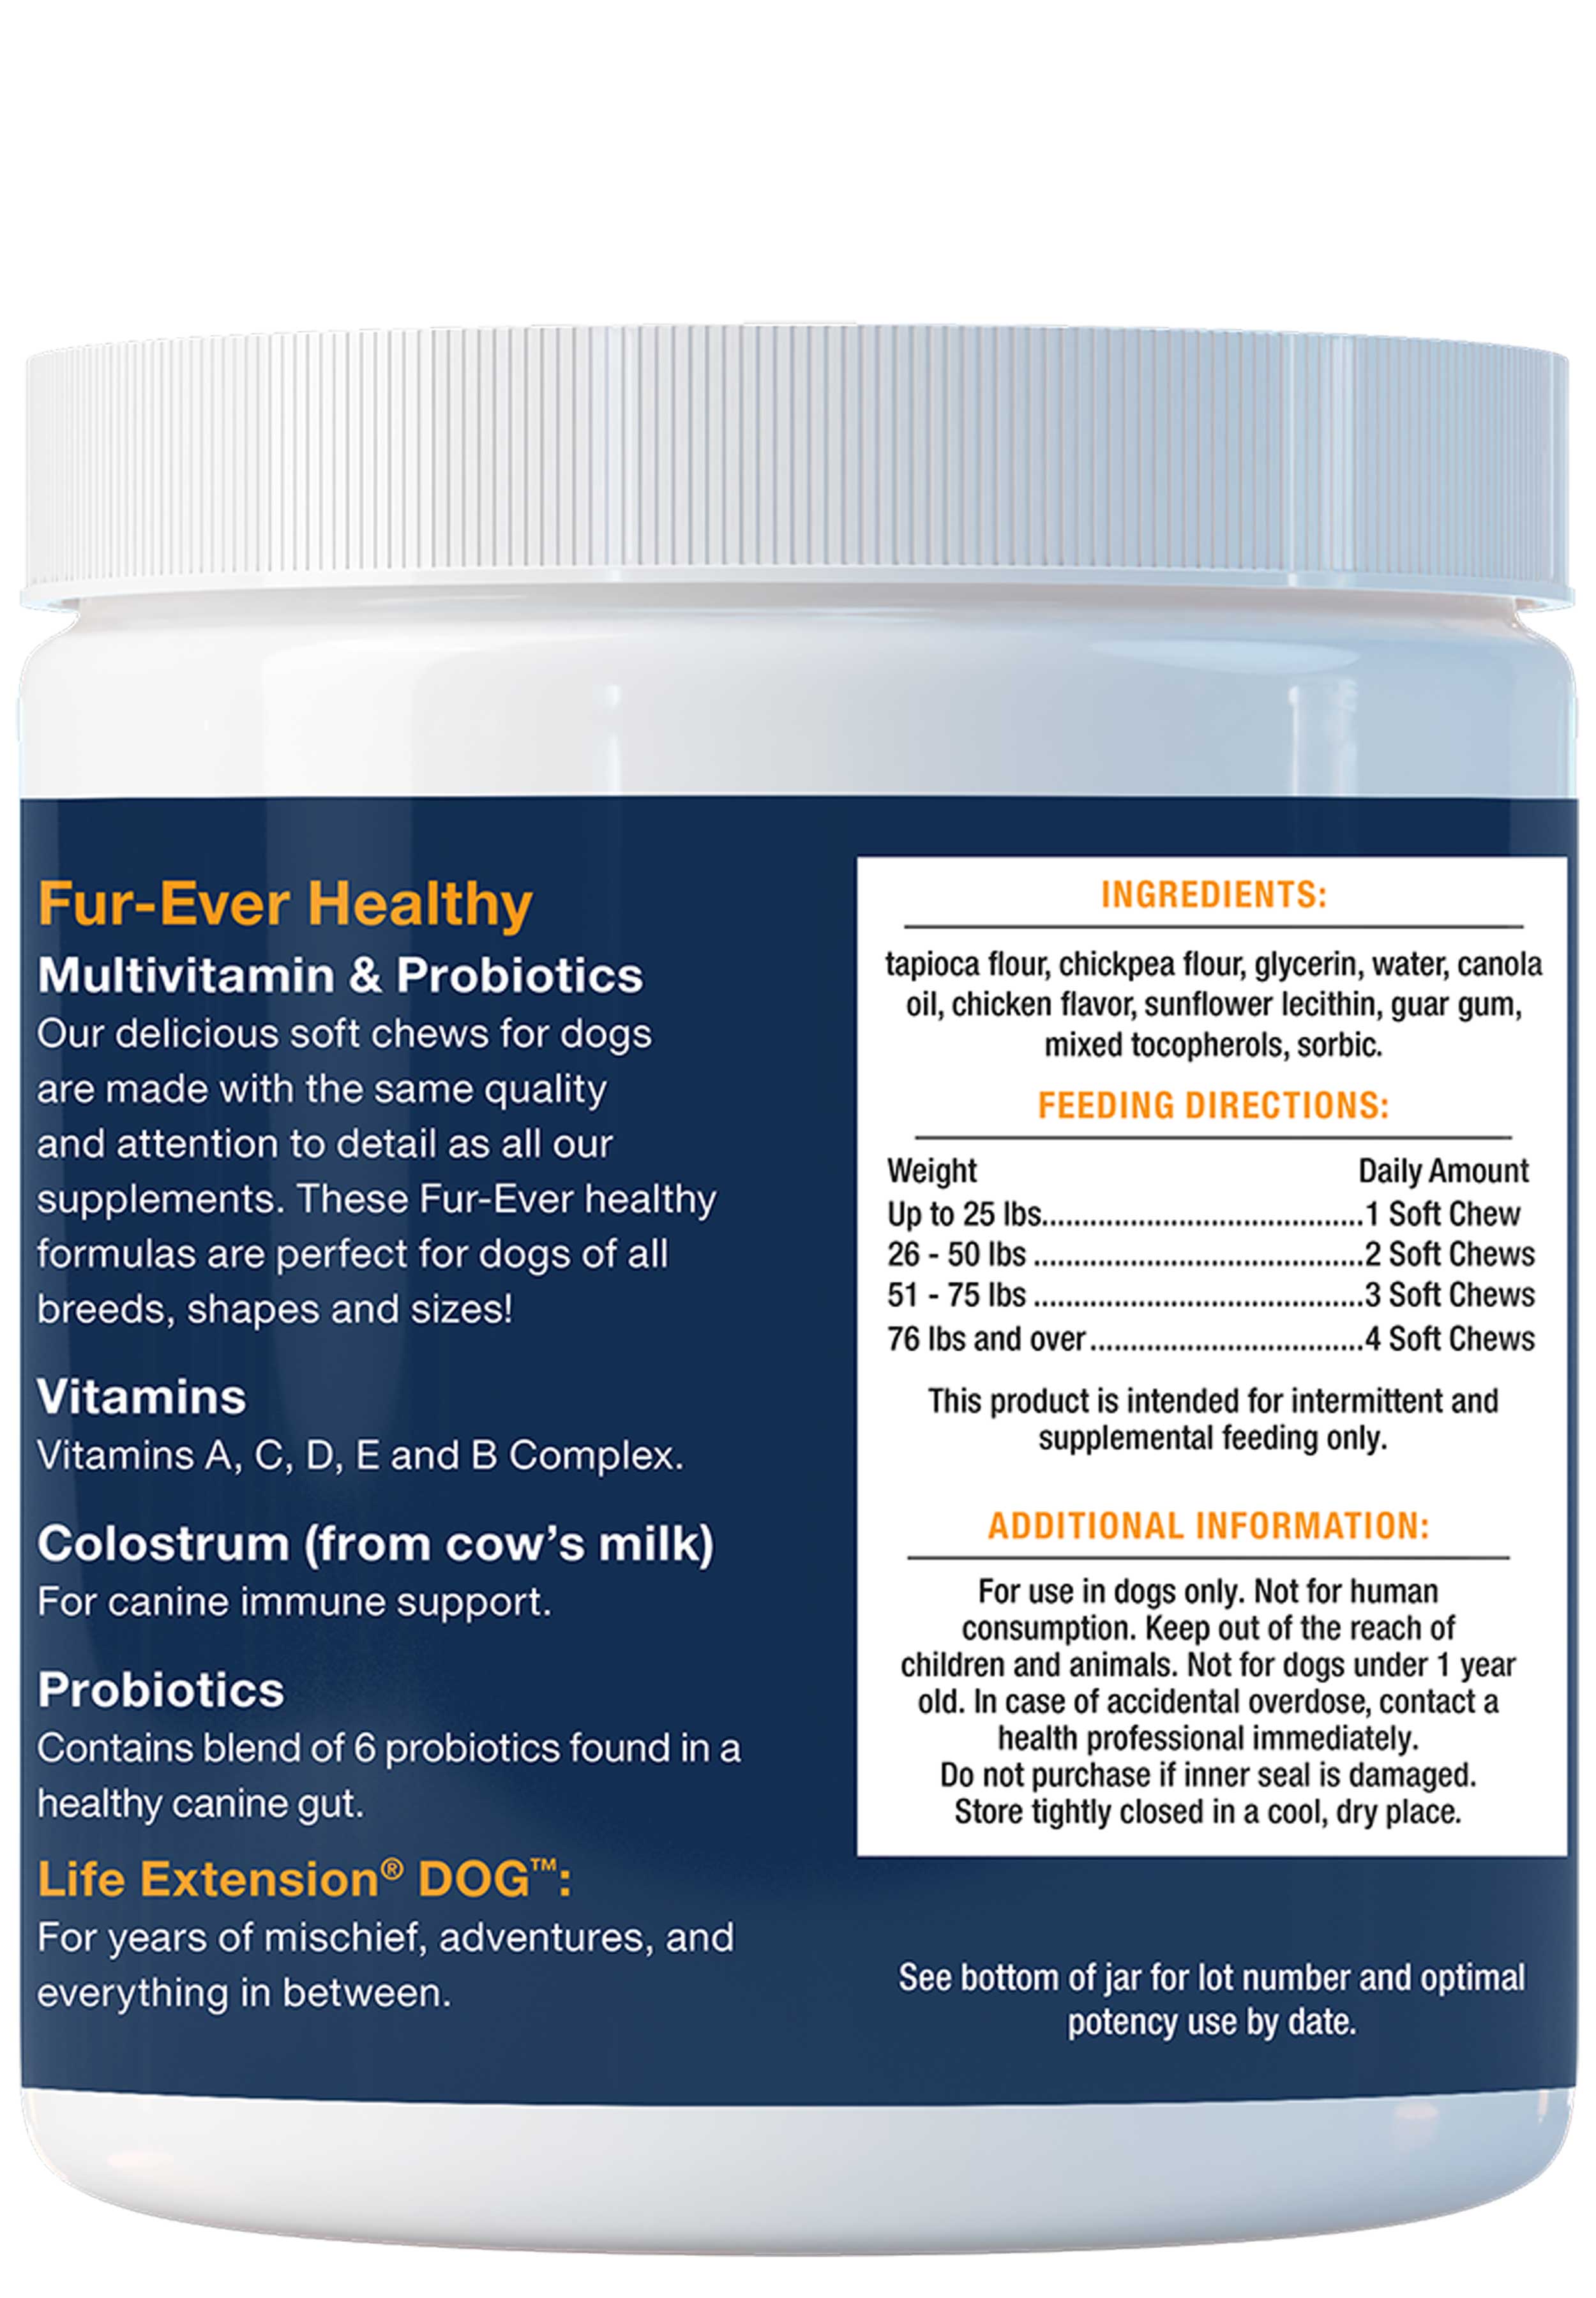 Life Extension DOG Multivitamin & Probiotics Ingredients